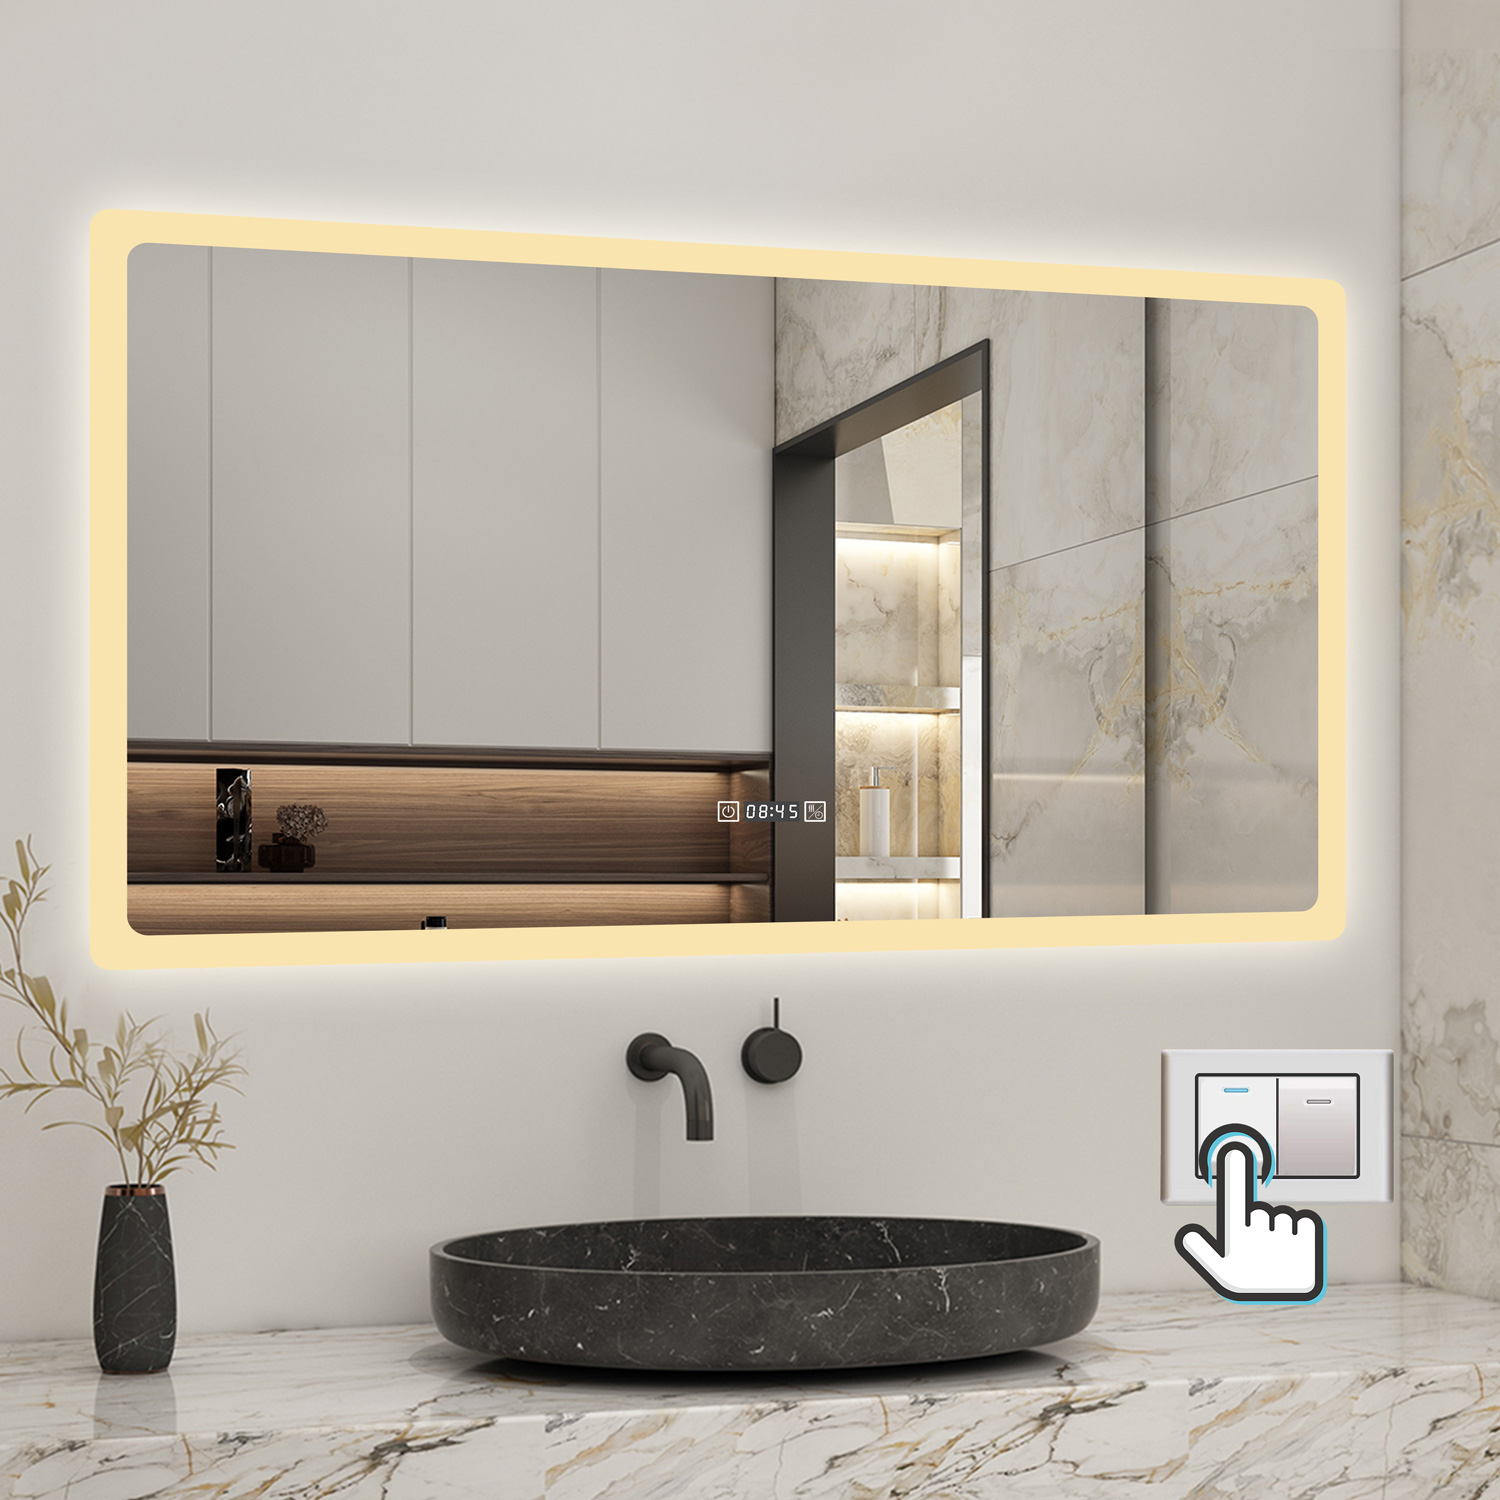 Badspiegel mit LED Beleuchtung Kosmetikspiegel - AQUABATOS